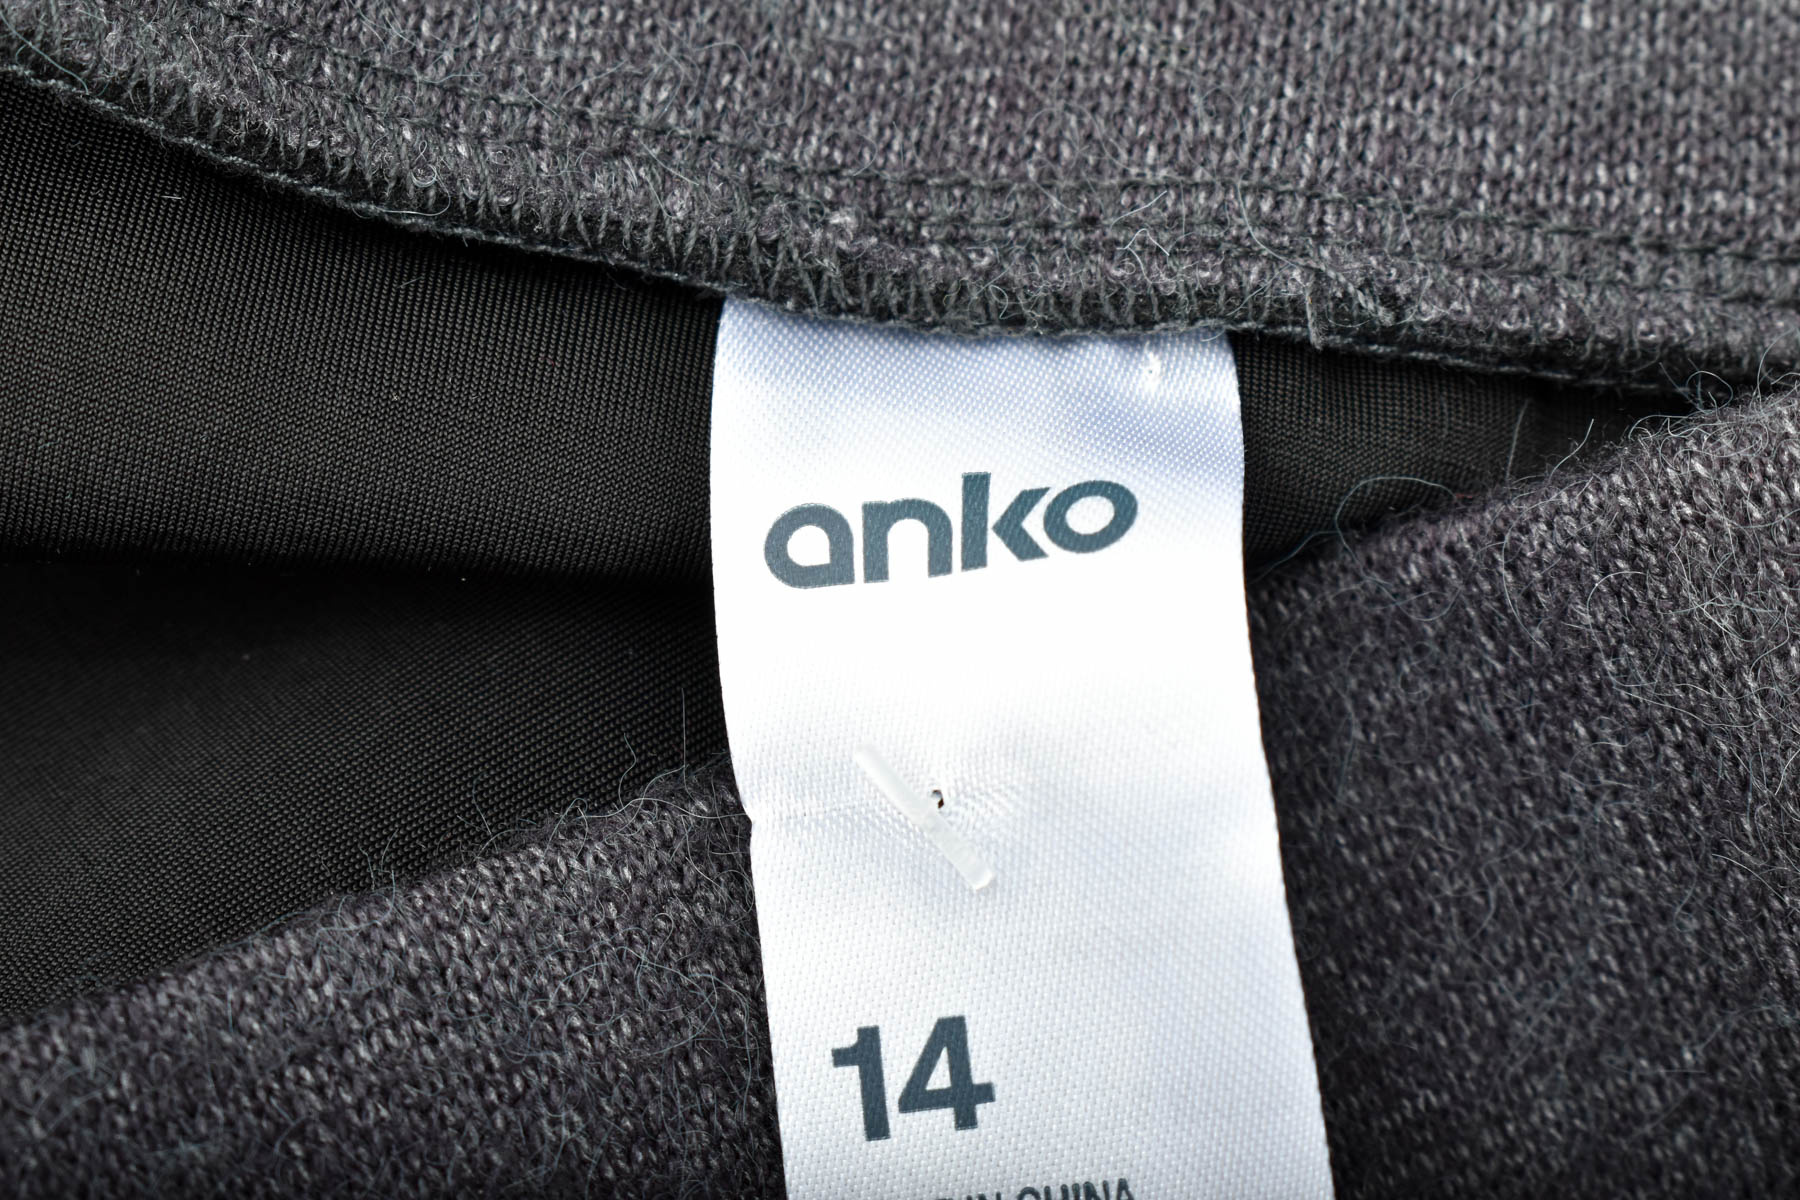 Skirt - Anko - 2